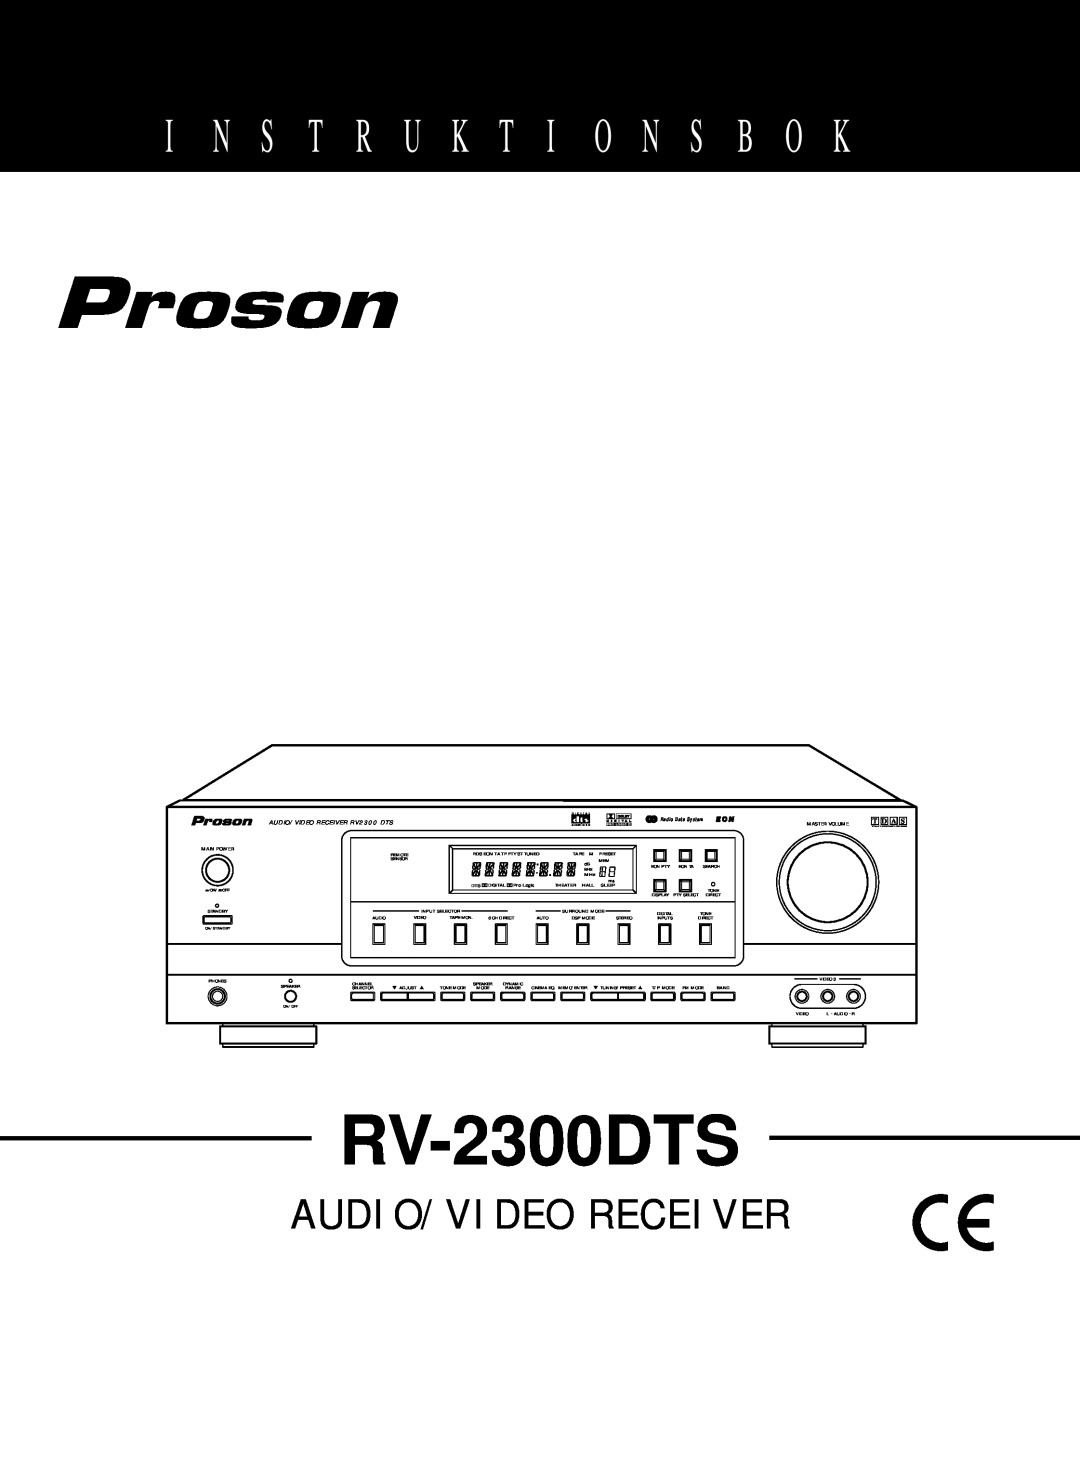 Proson RV-2300DTS manual I N S T R U K T I O N S B O K, Audio/Video Receiver, T D A S, AUDIO/VIDEO RECEIVER RV2300 DTS 